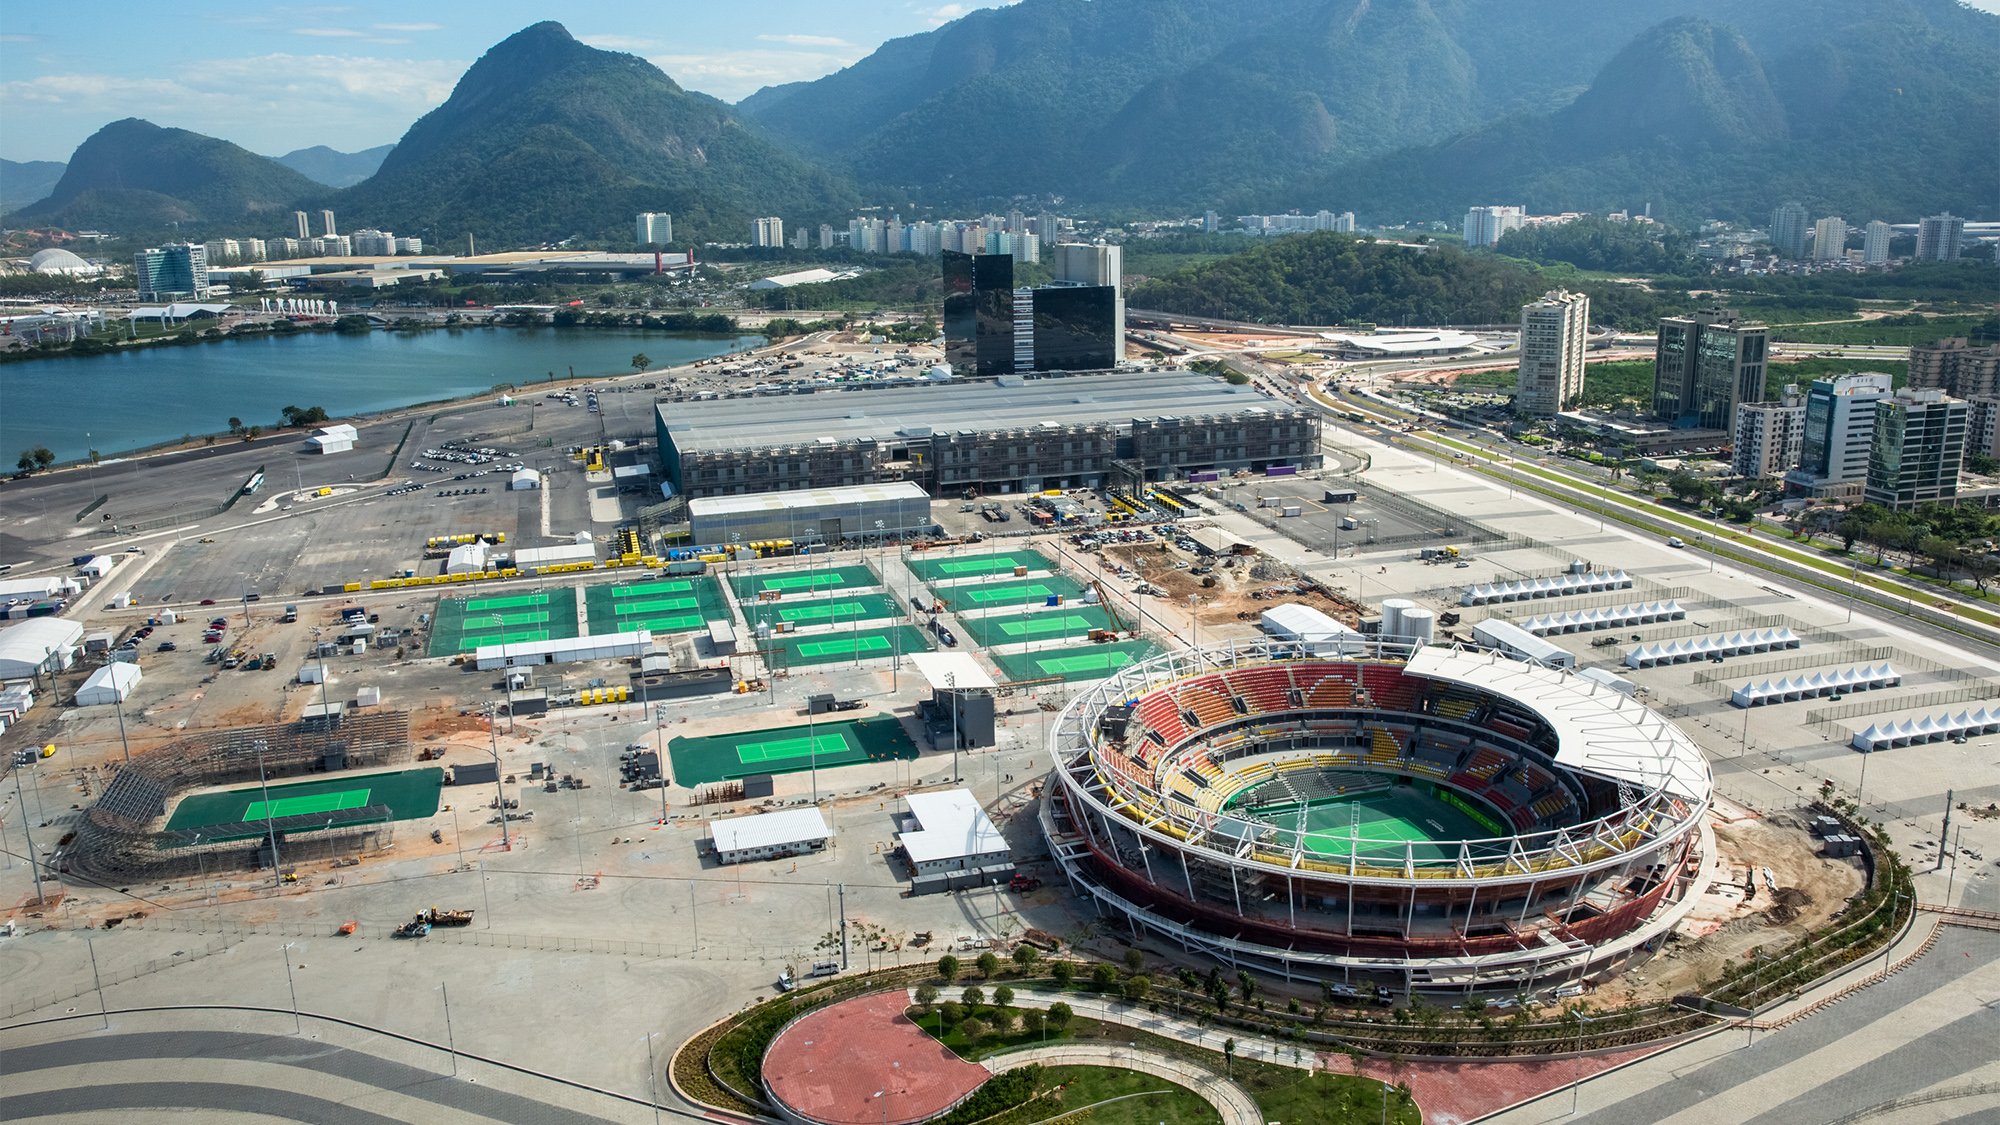 The Rio 2016 Olympic venues. Photo: Andre Motta